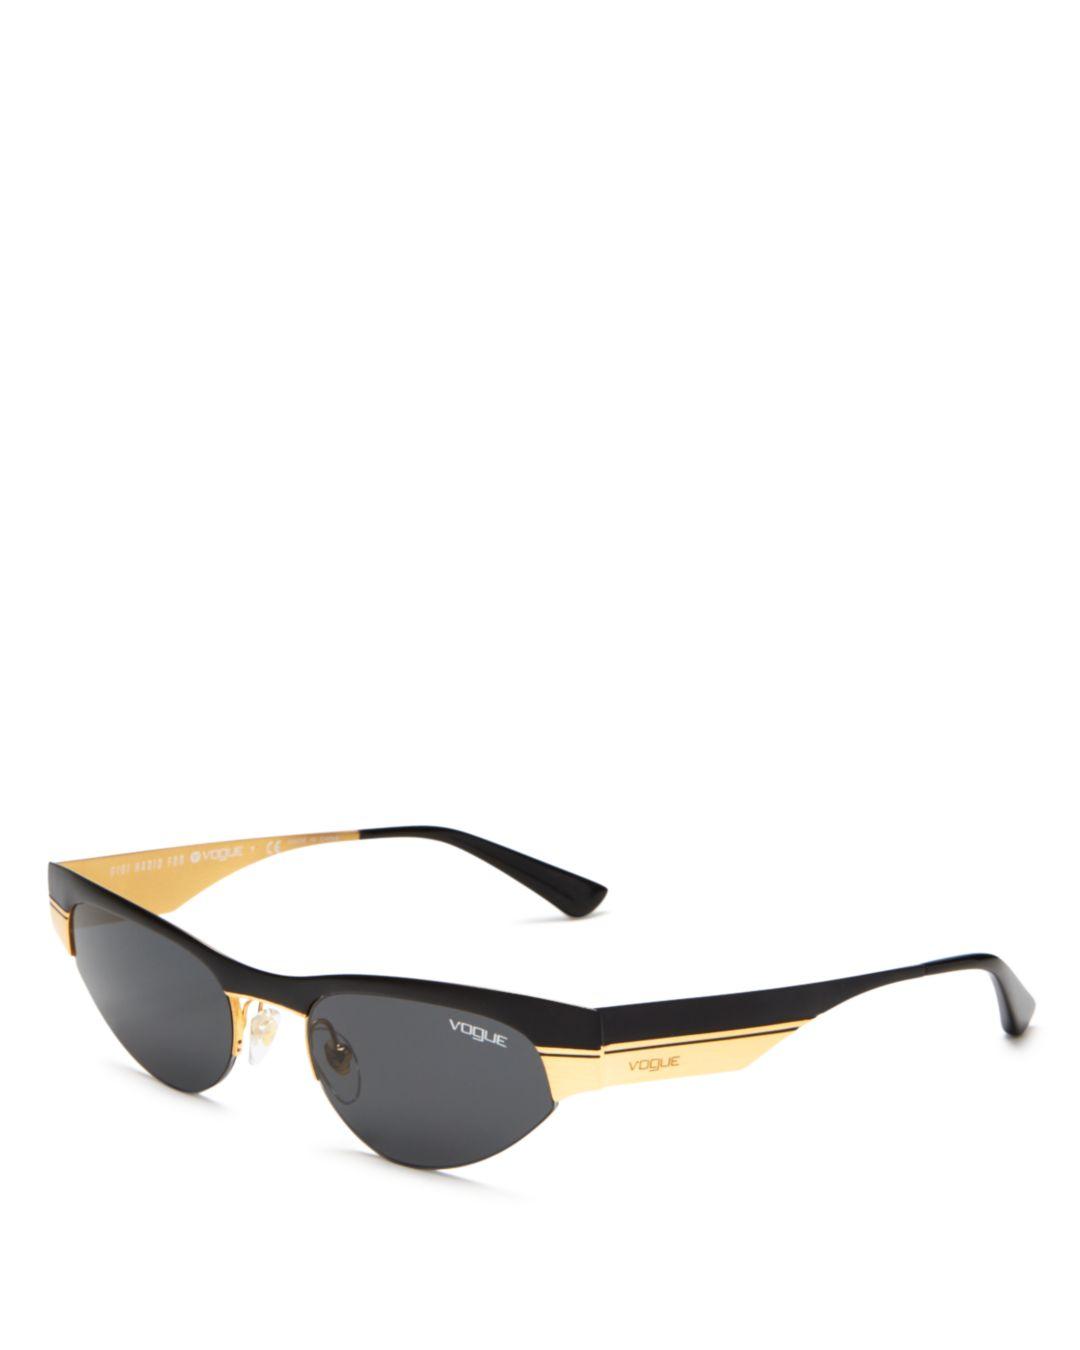 Vogue Eyewear Gigi Hadid For Vogue Vo4105s Black & Gold Sunglasses - Lyst